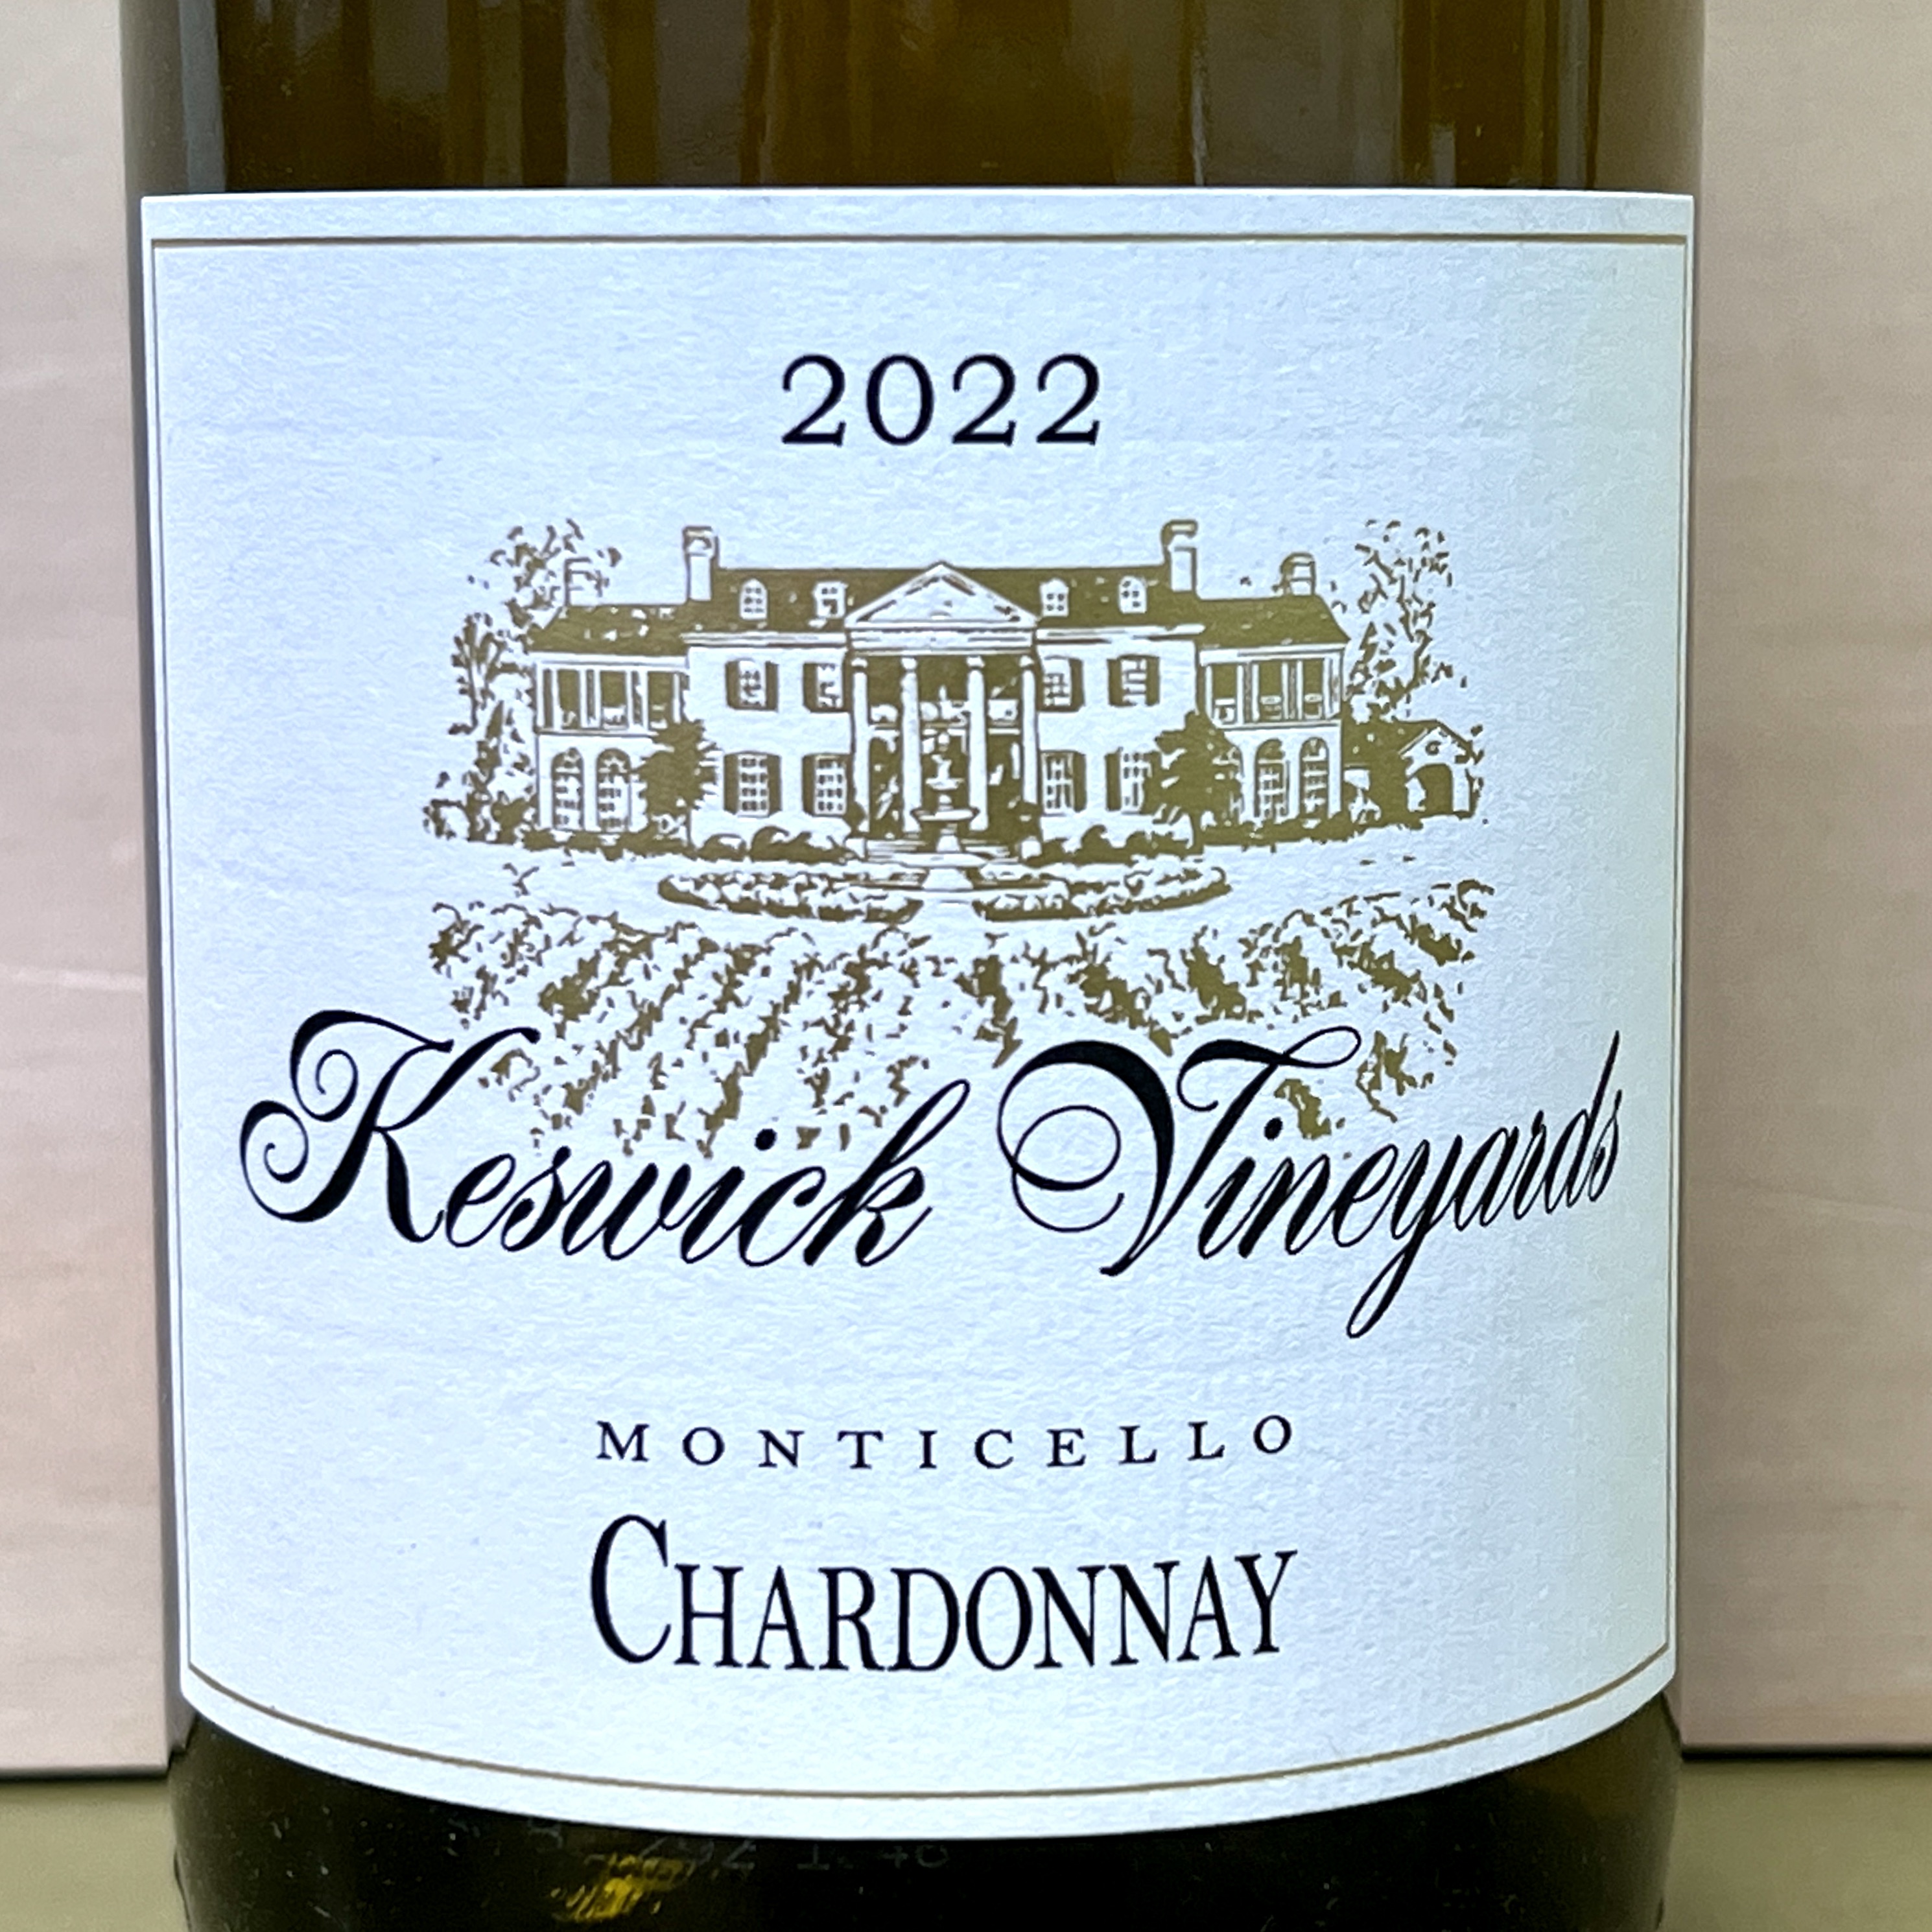 Keswick Vineyards Chardonnay Monticello 2022